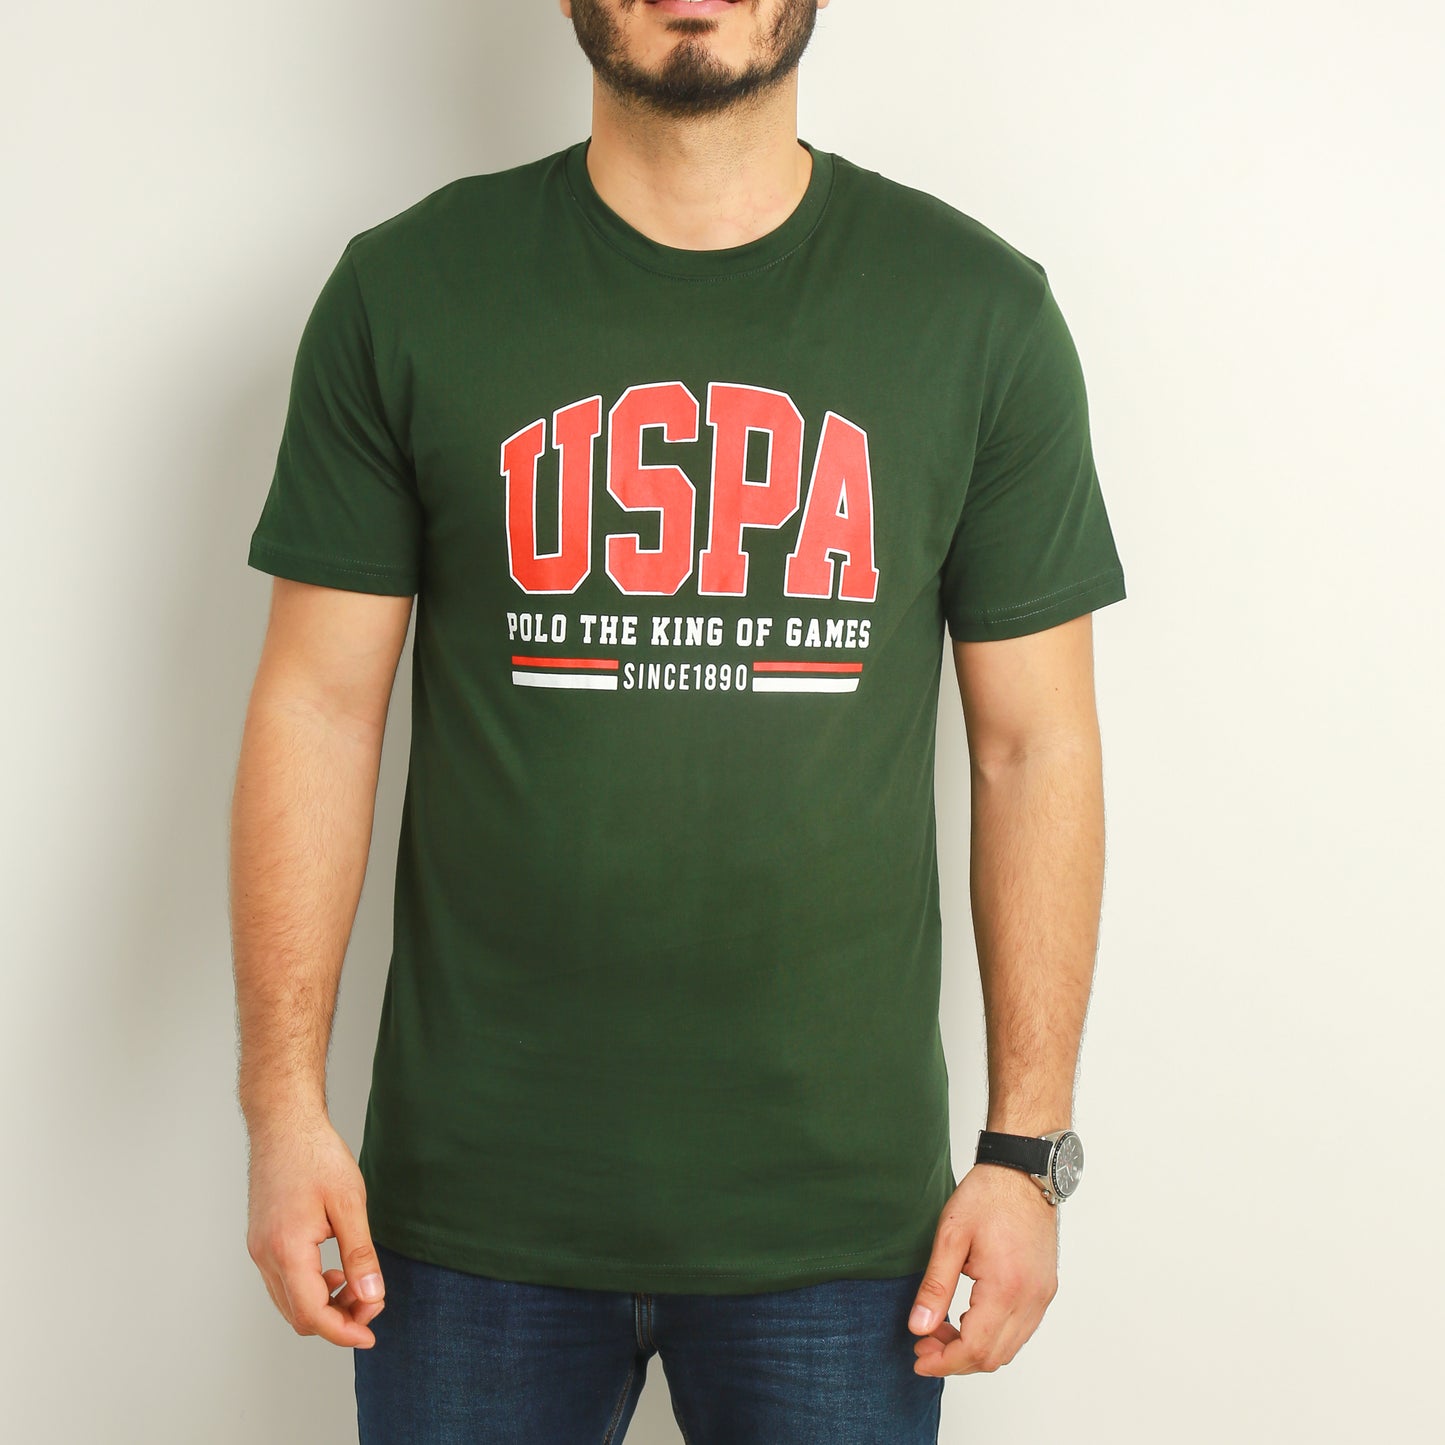 US Polo T-Shirt Homme - Vert